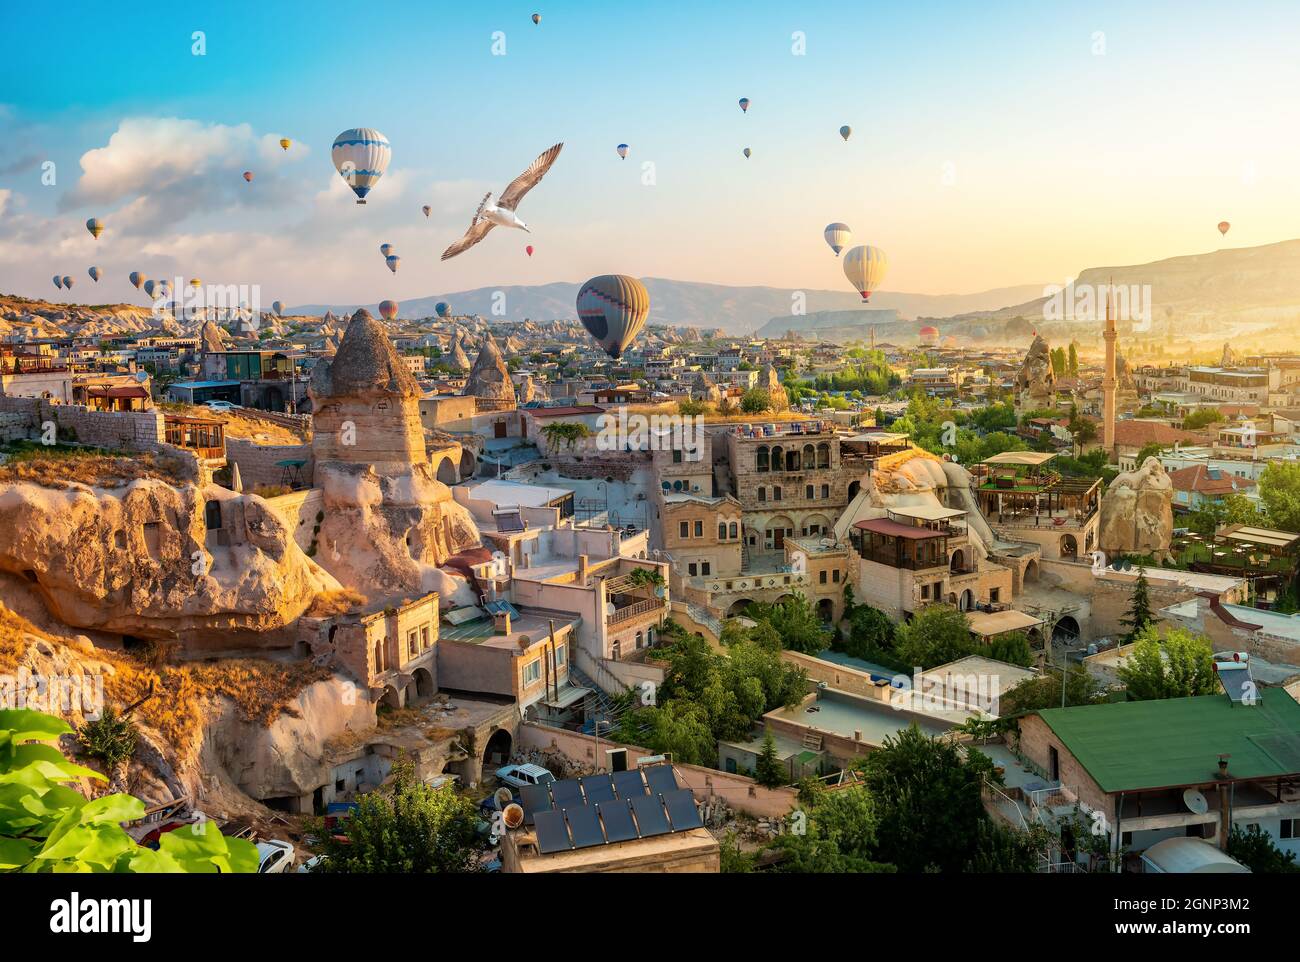 Hot air balloons at sunset in Goreme town, Cappadocia, Turkey Stock Photo